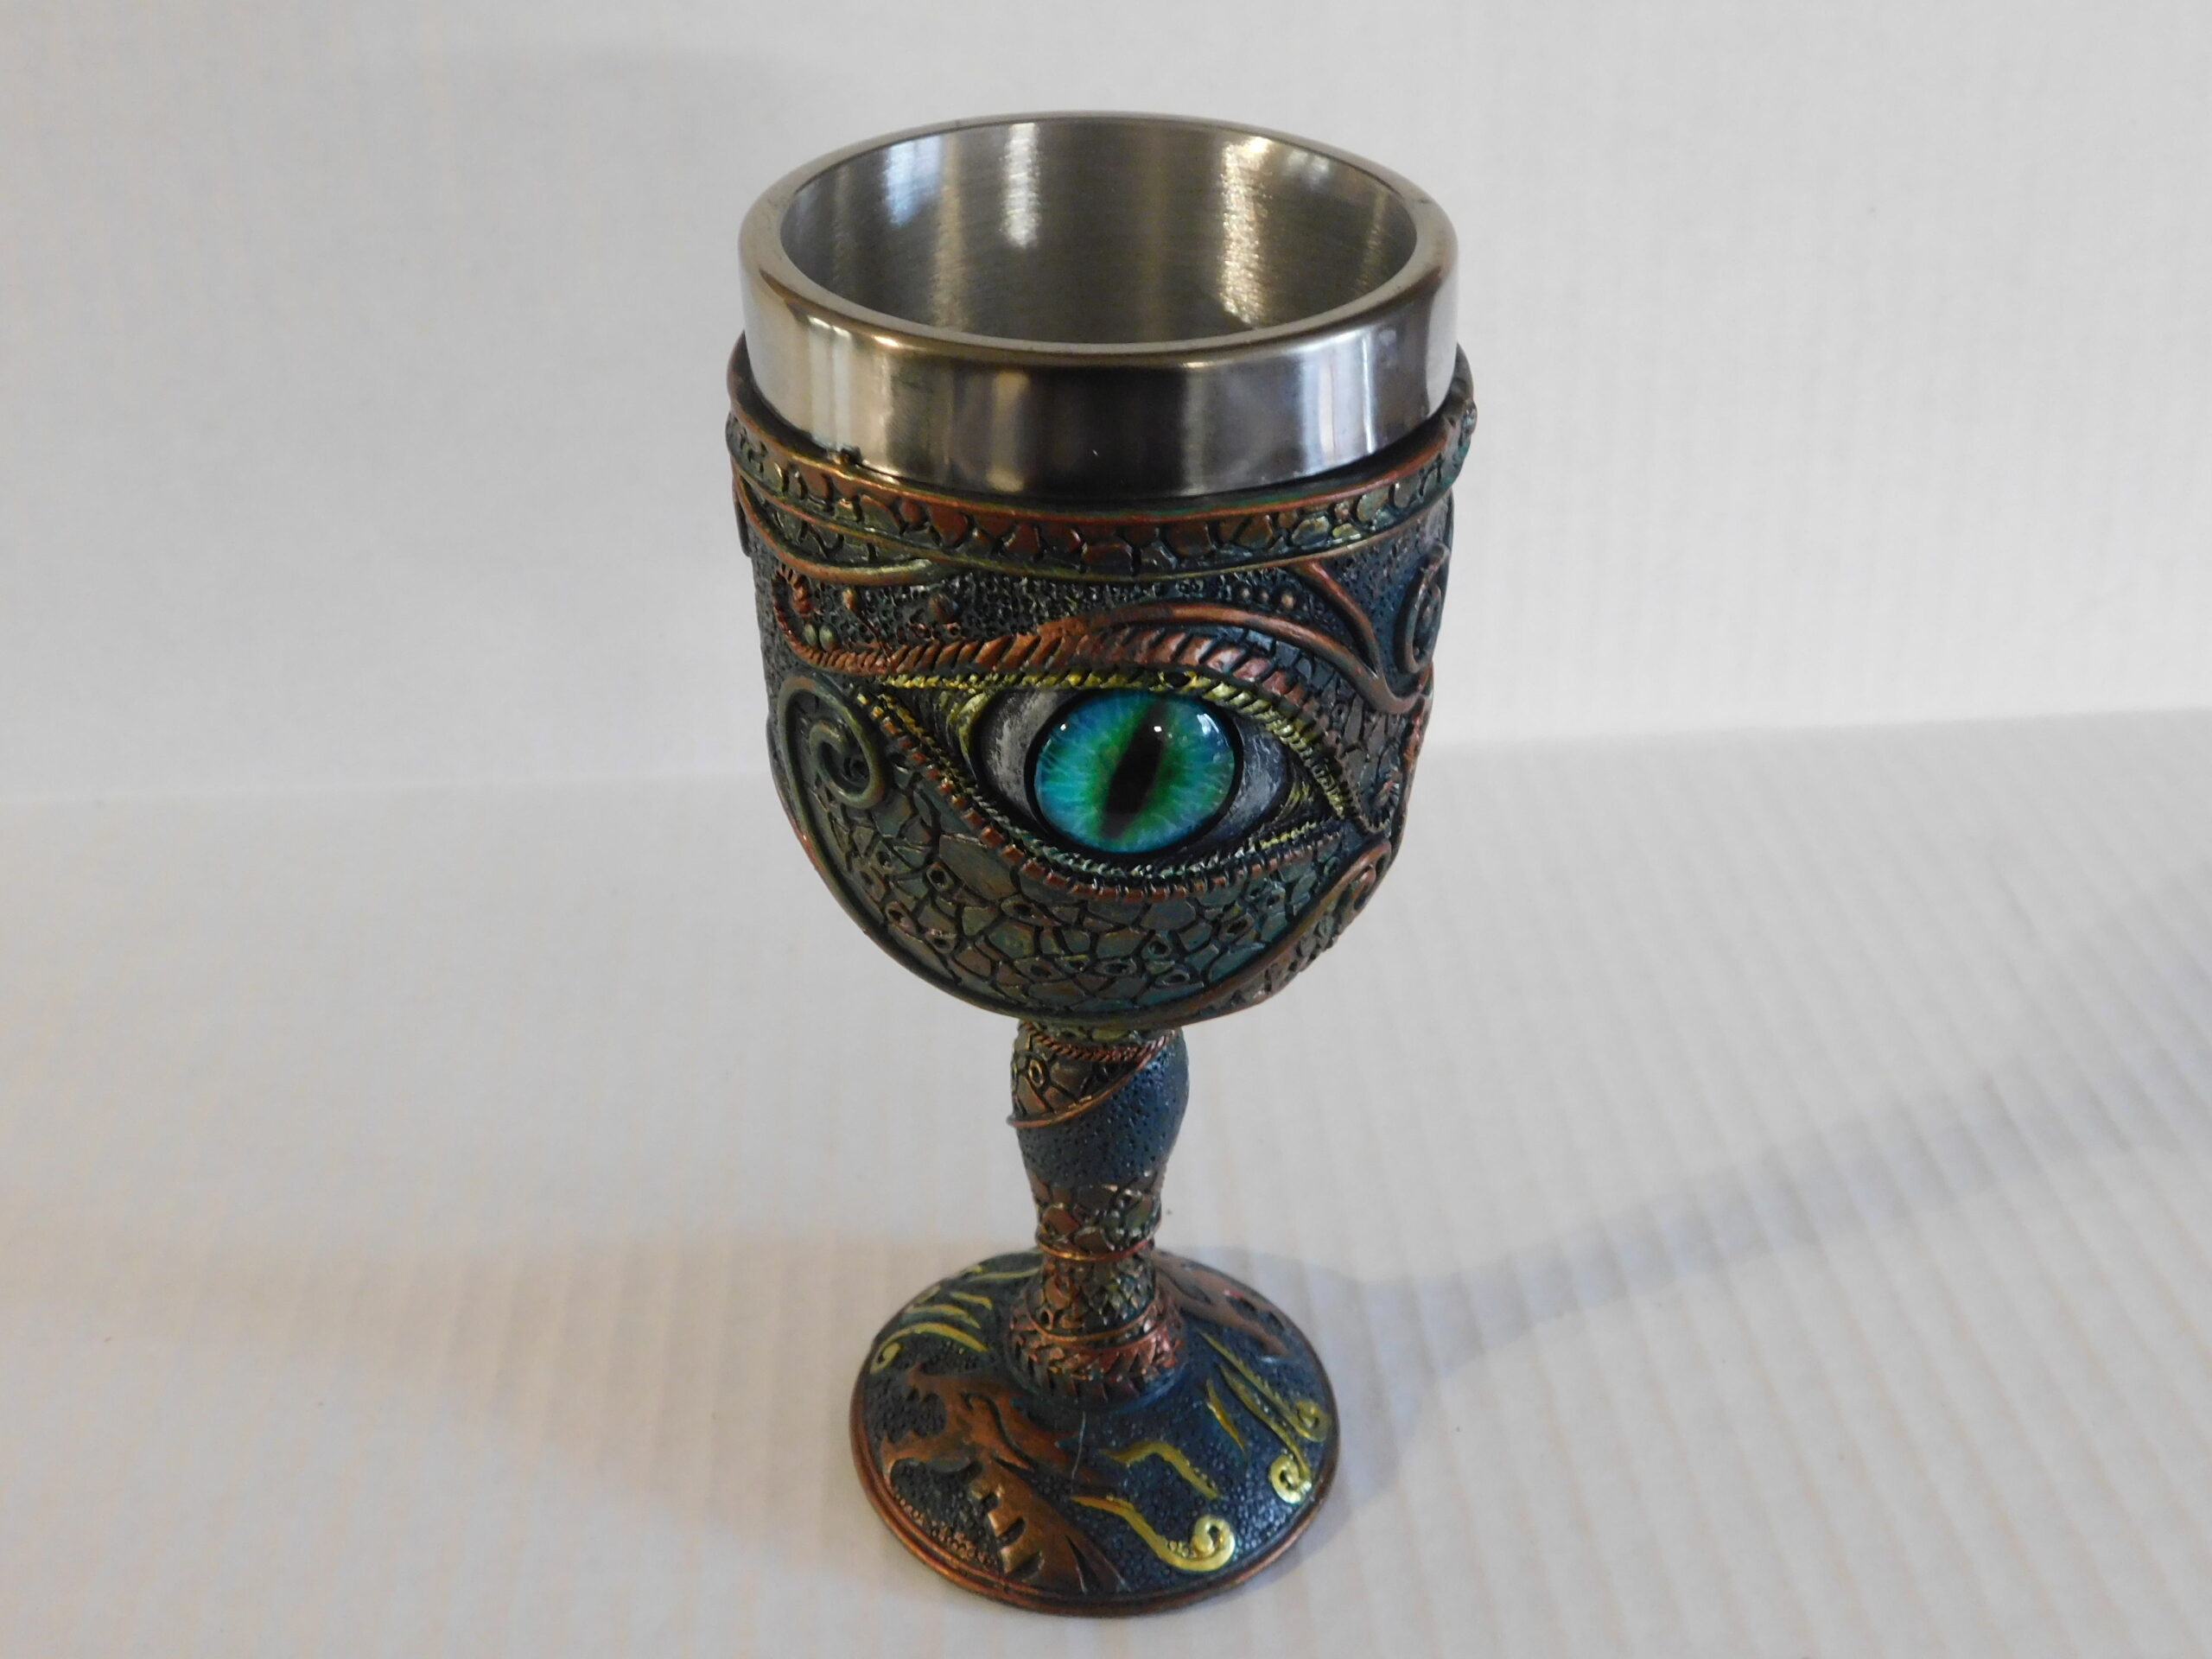 Dragon Eye goblet